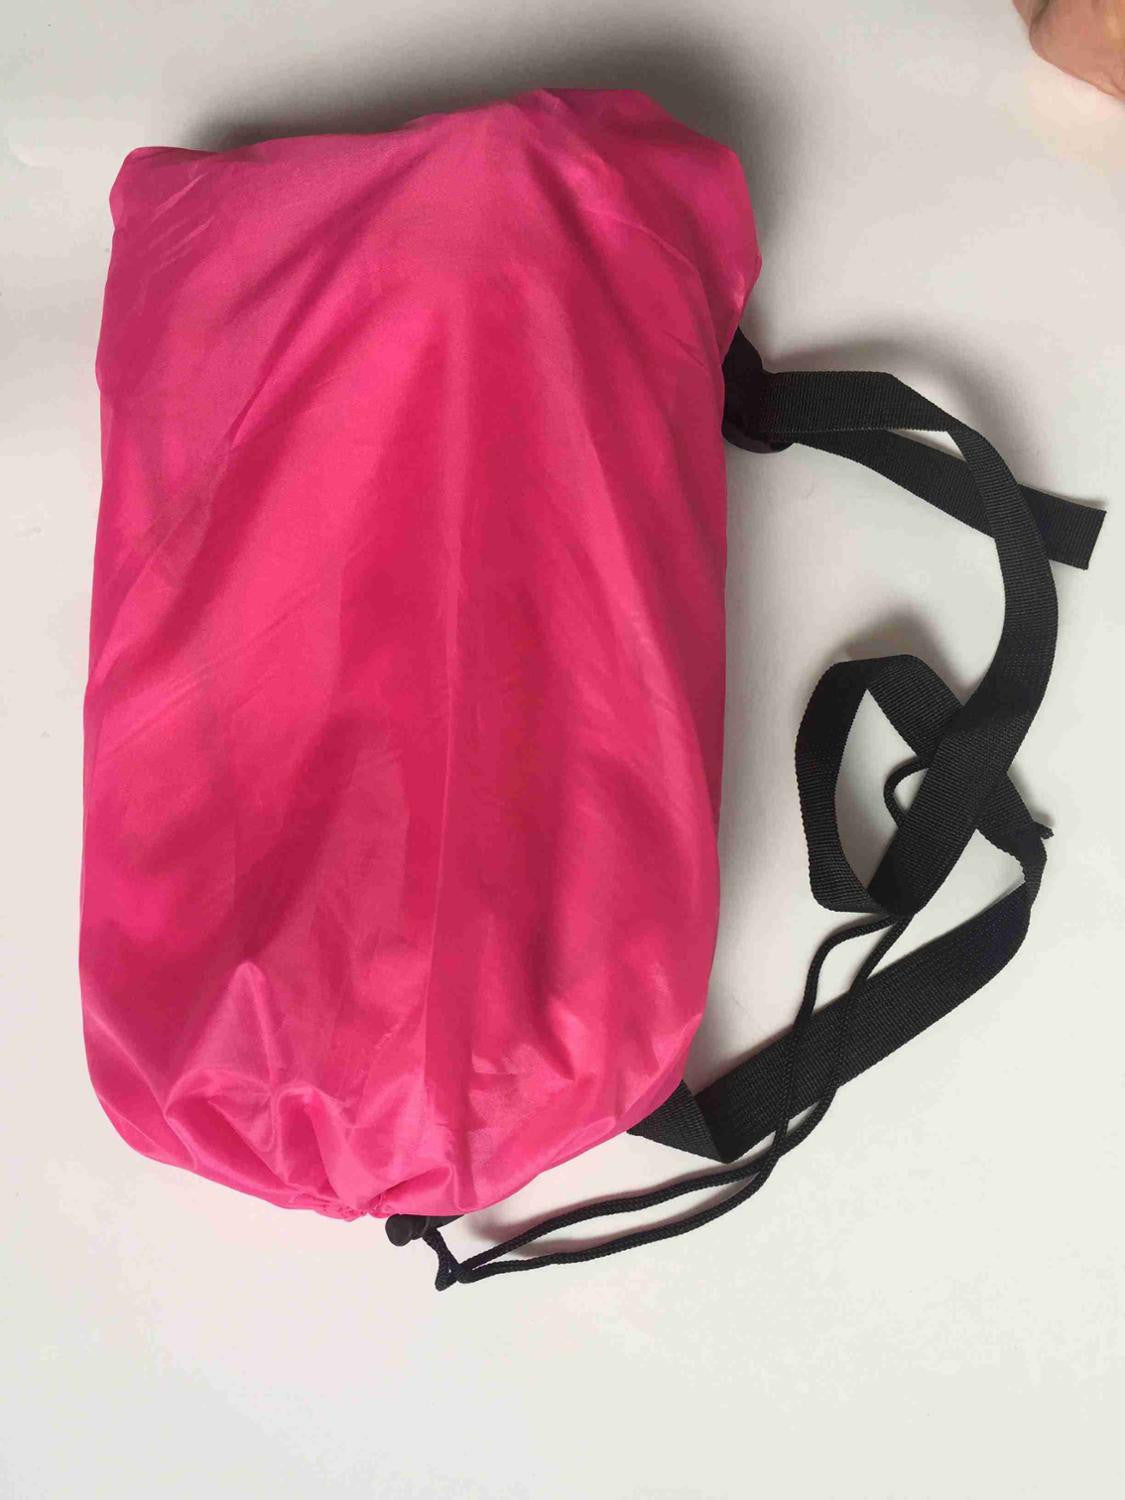 Yuetor 52 Beach lay bag Hangout sleep Air Bed Lounger laybag Outdoor fast inflatable folding sleeping lazy bag-Dollar Bargains Online Shopping Australia